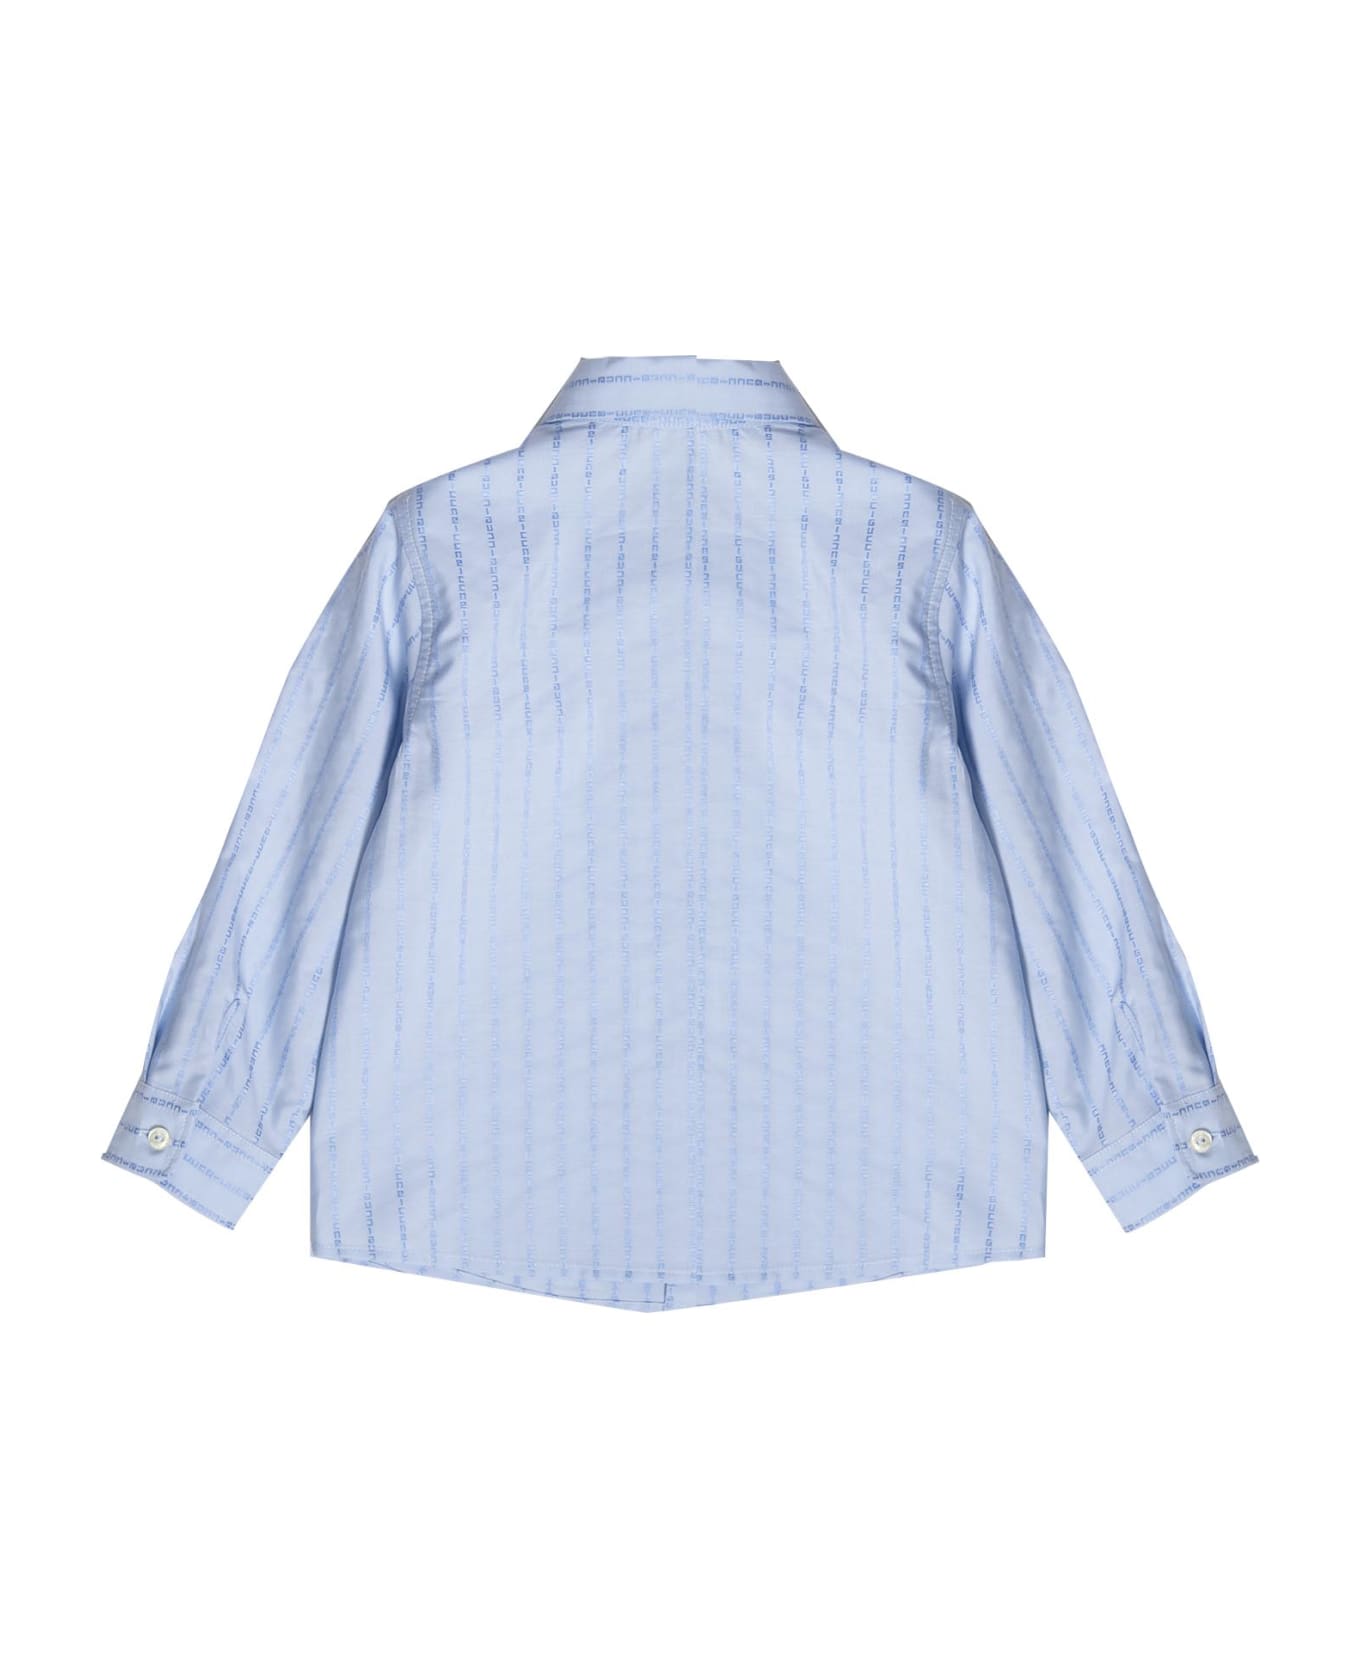 Gucci Cotton Shirt - Light blue シャツ